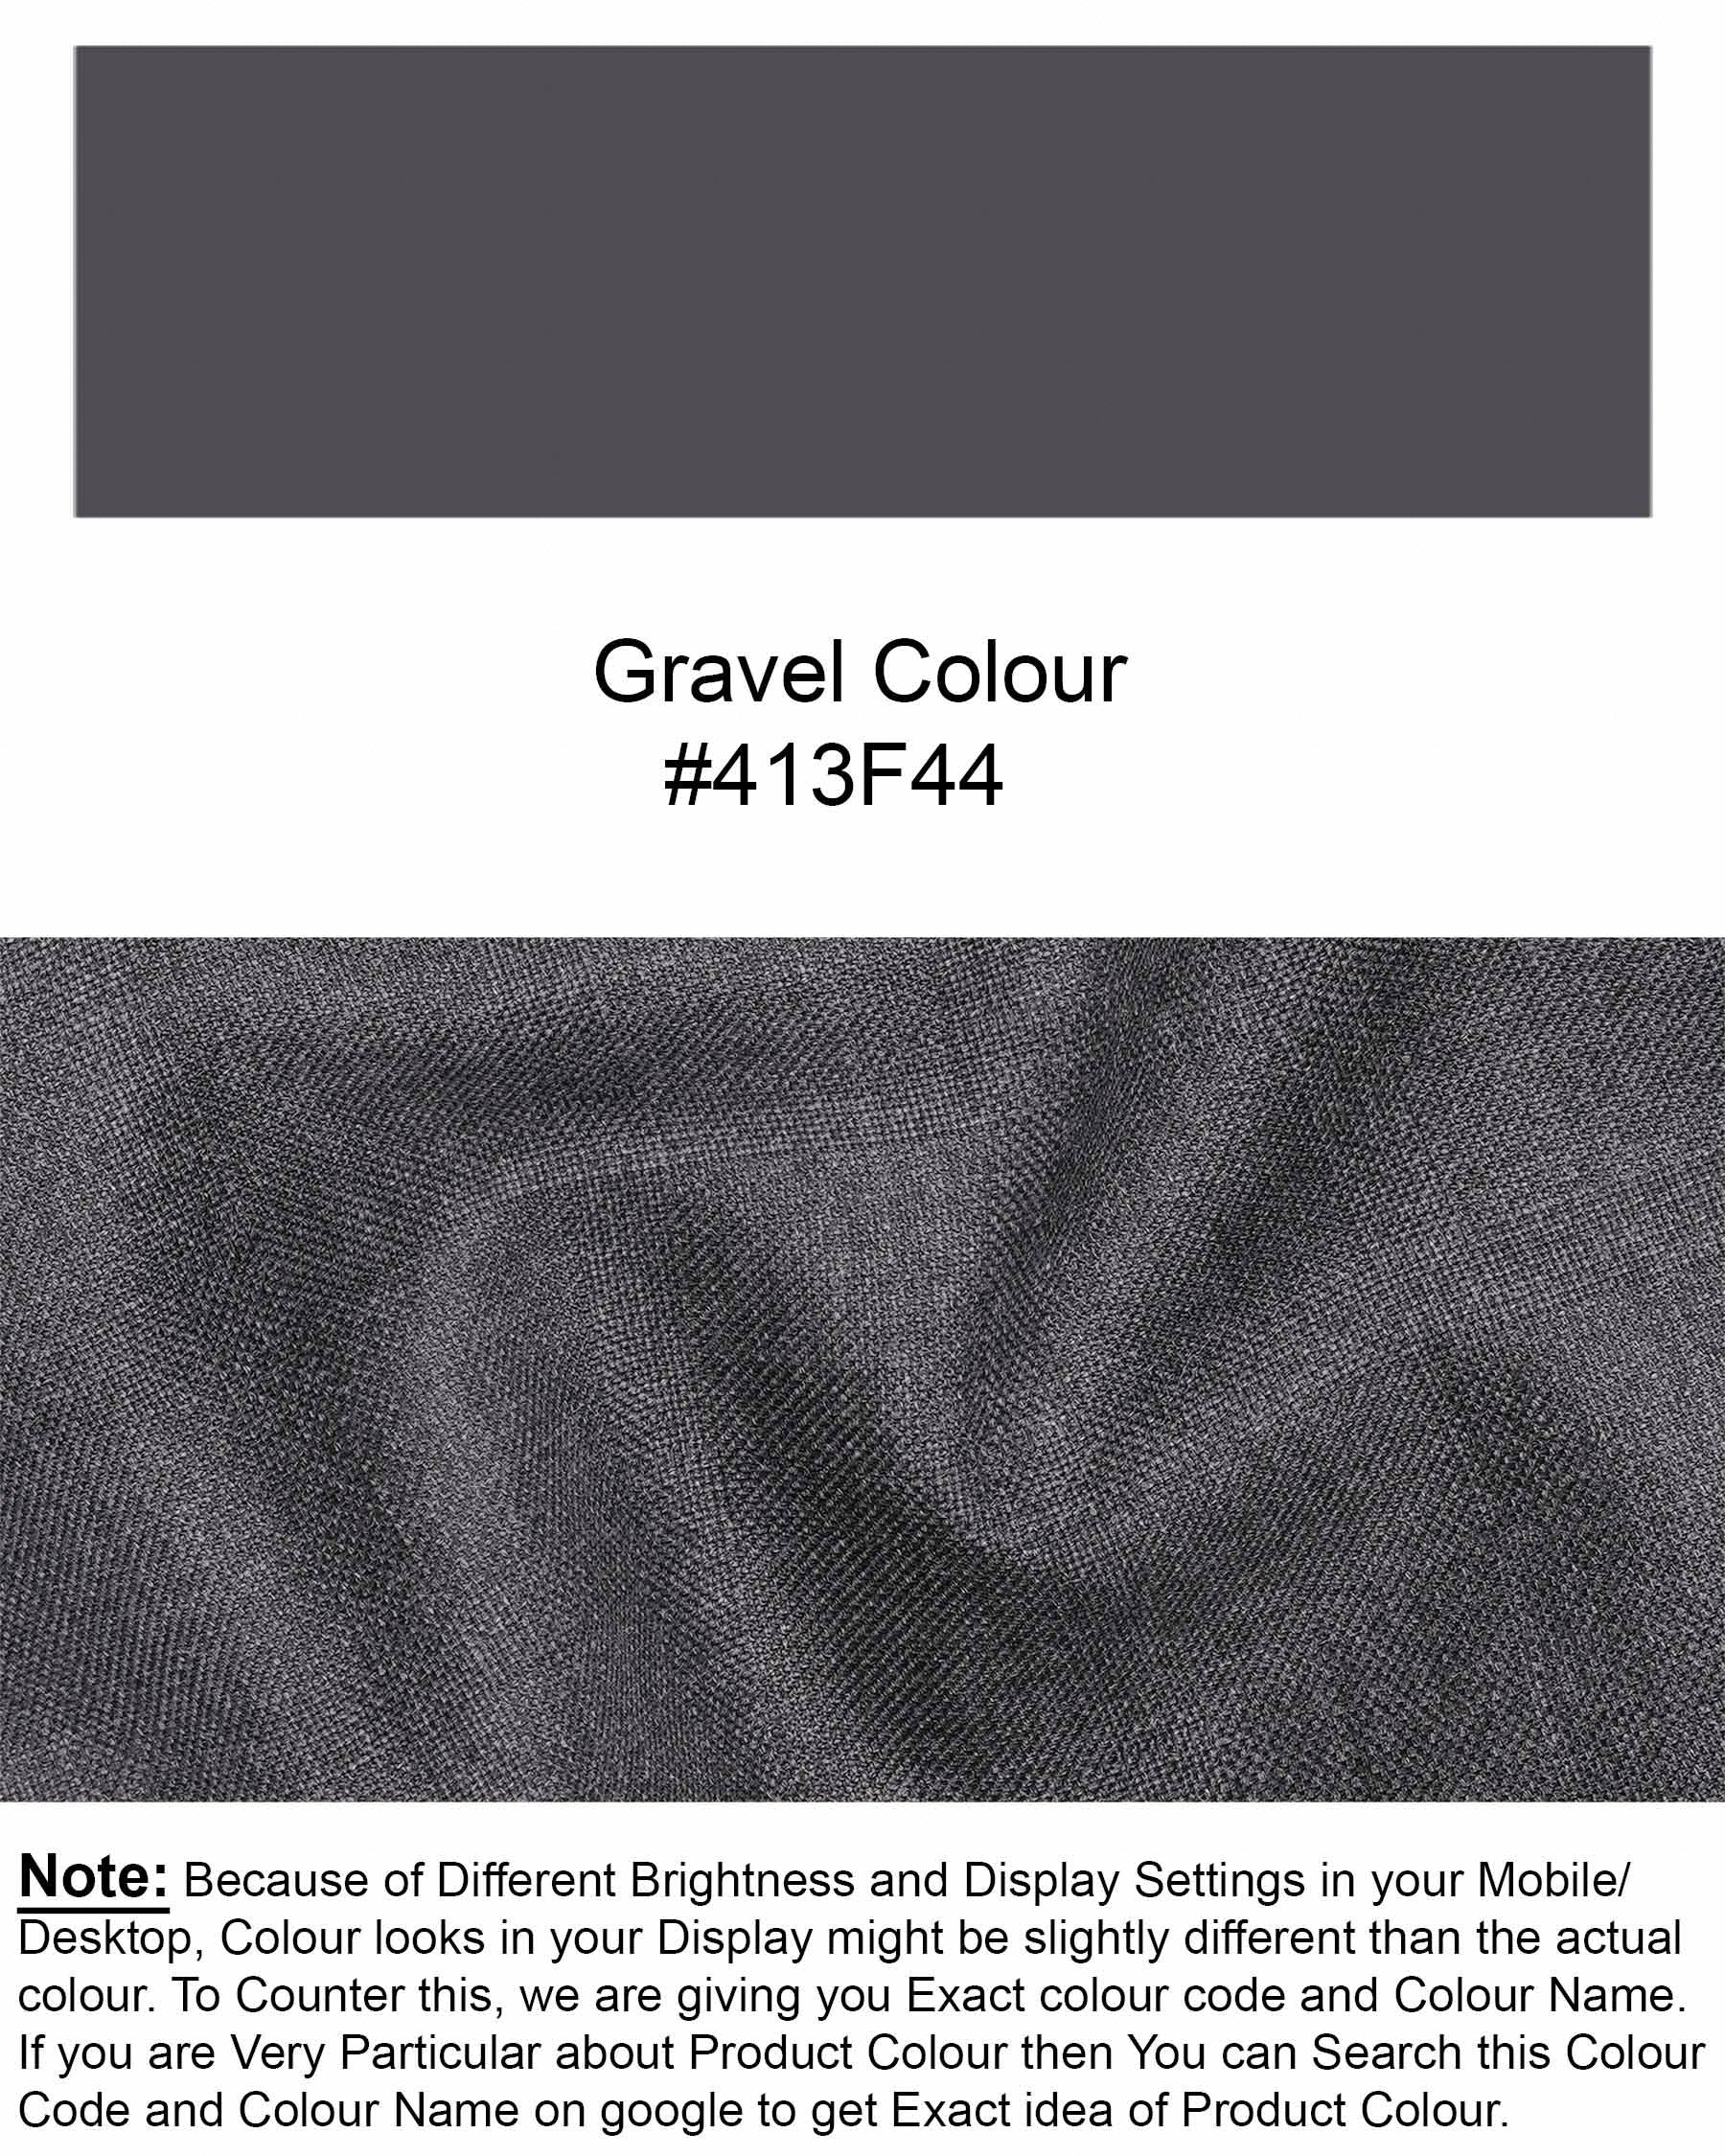 Gravel Gray Textured Pant T1917-28, T1917-30, T1917-32, T1917-34, T1917-36, T1917-38, T1917-40, T1917-42, T1917-44